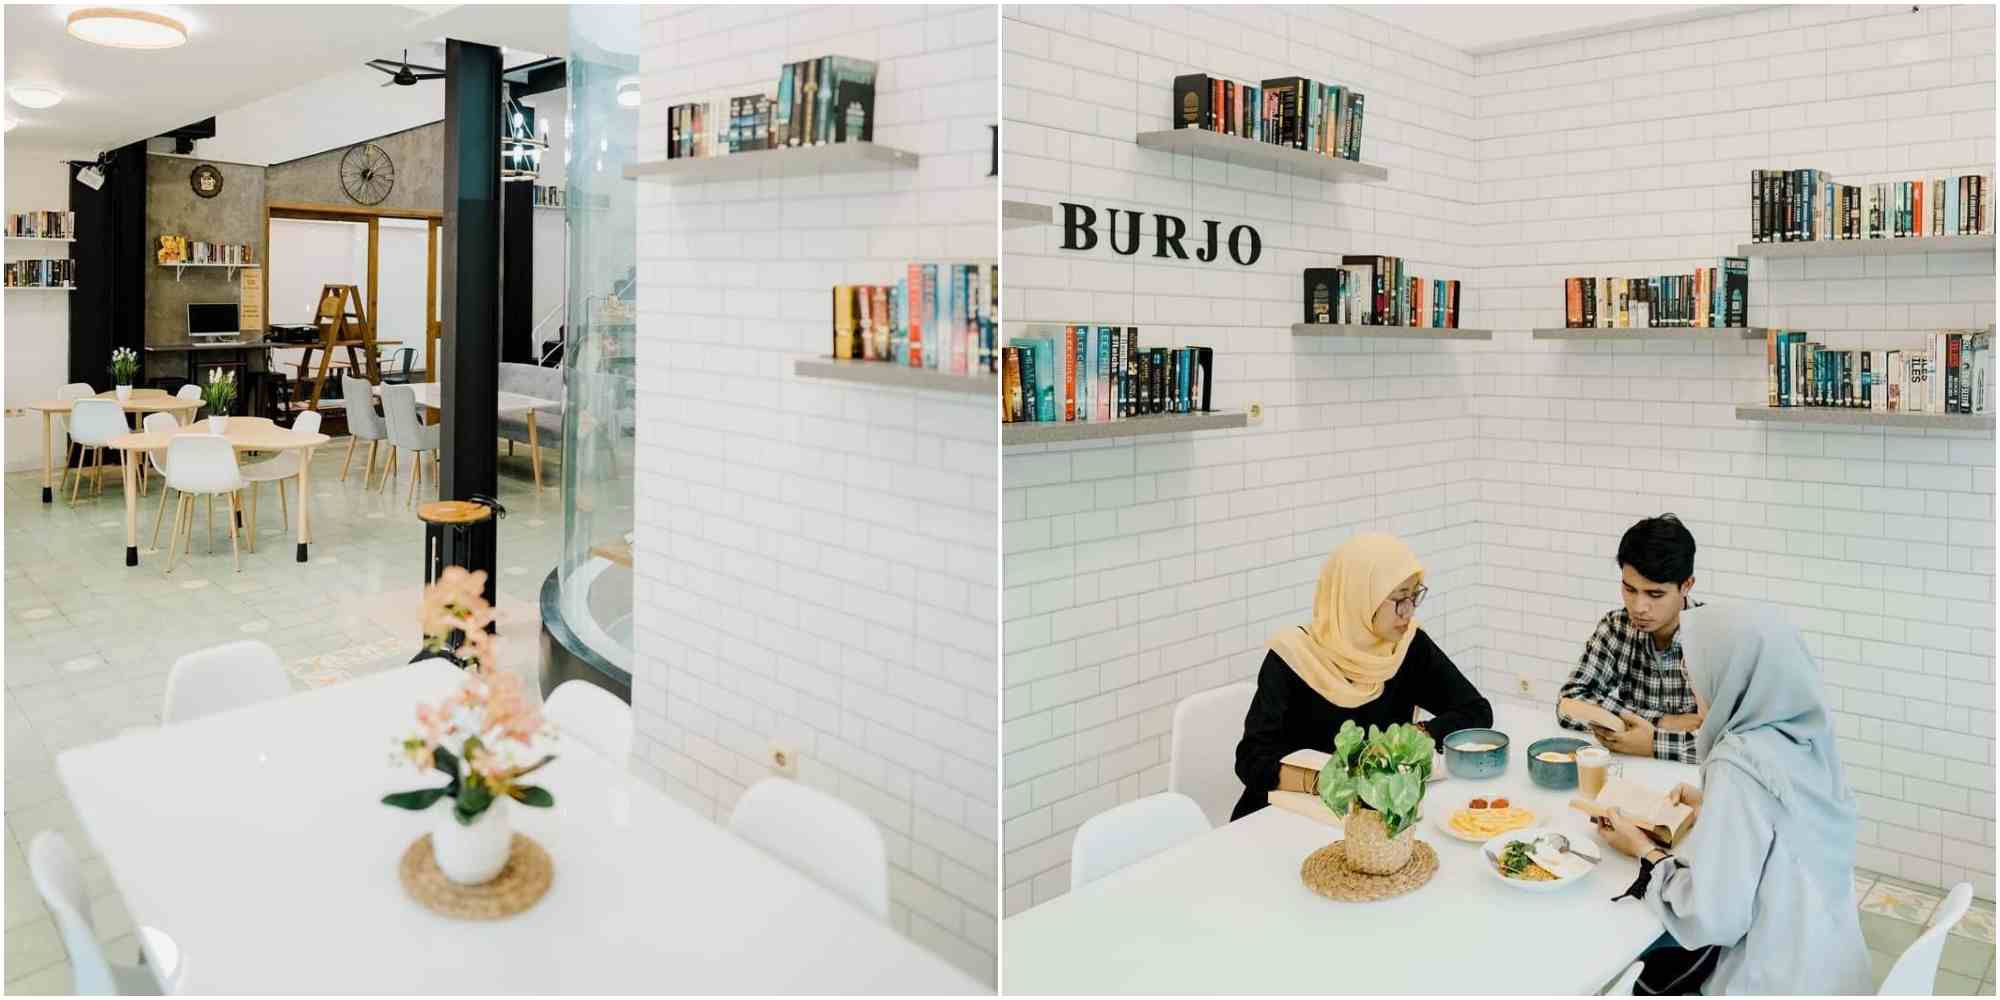 book cafe jogja - Ministry Homestay Burjo Space